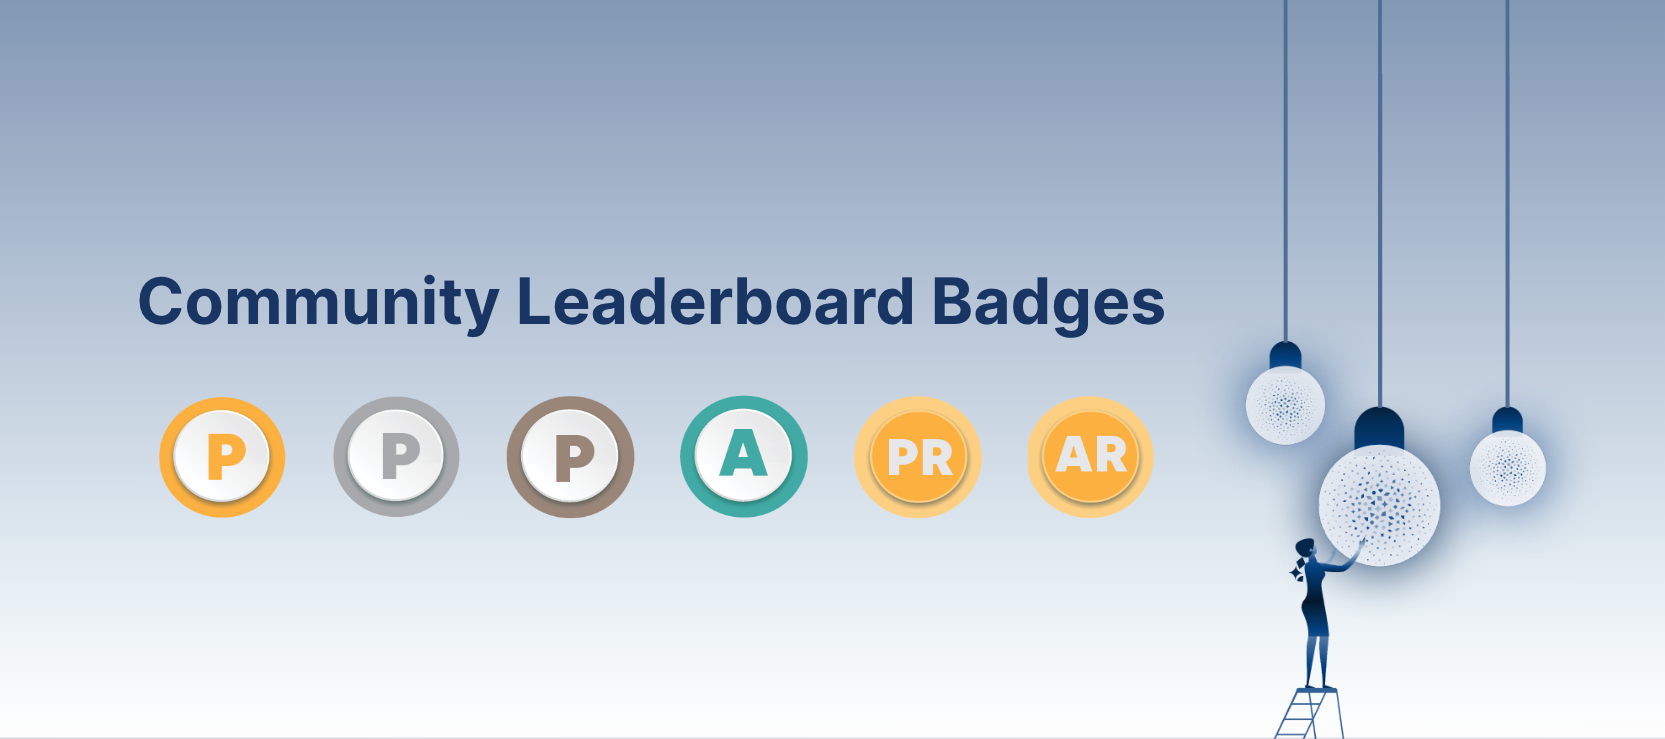 Introducing Community Leaderboard Badges!